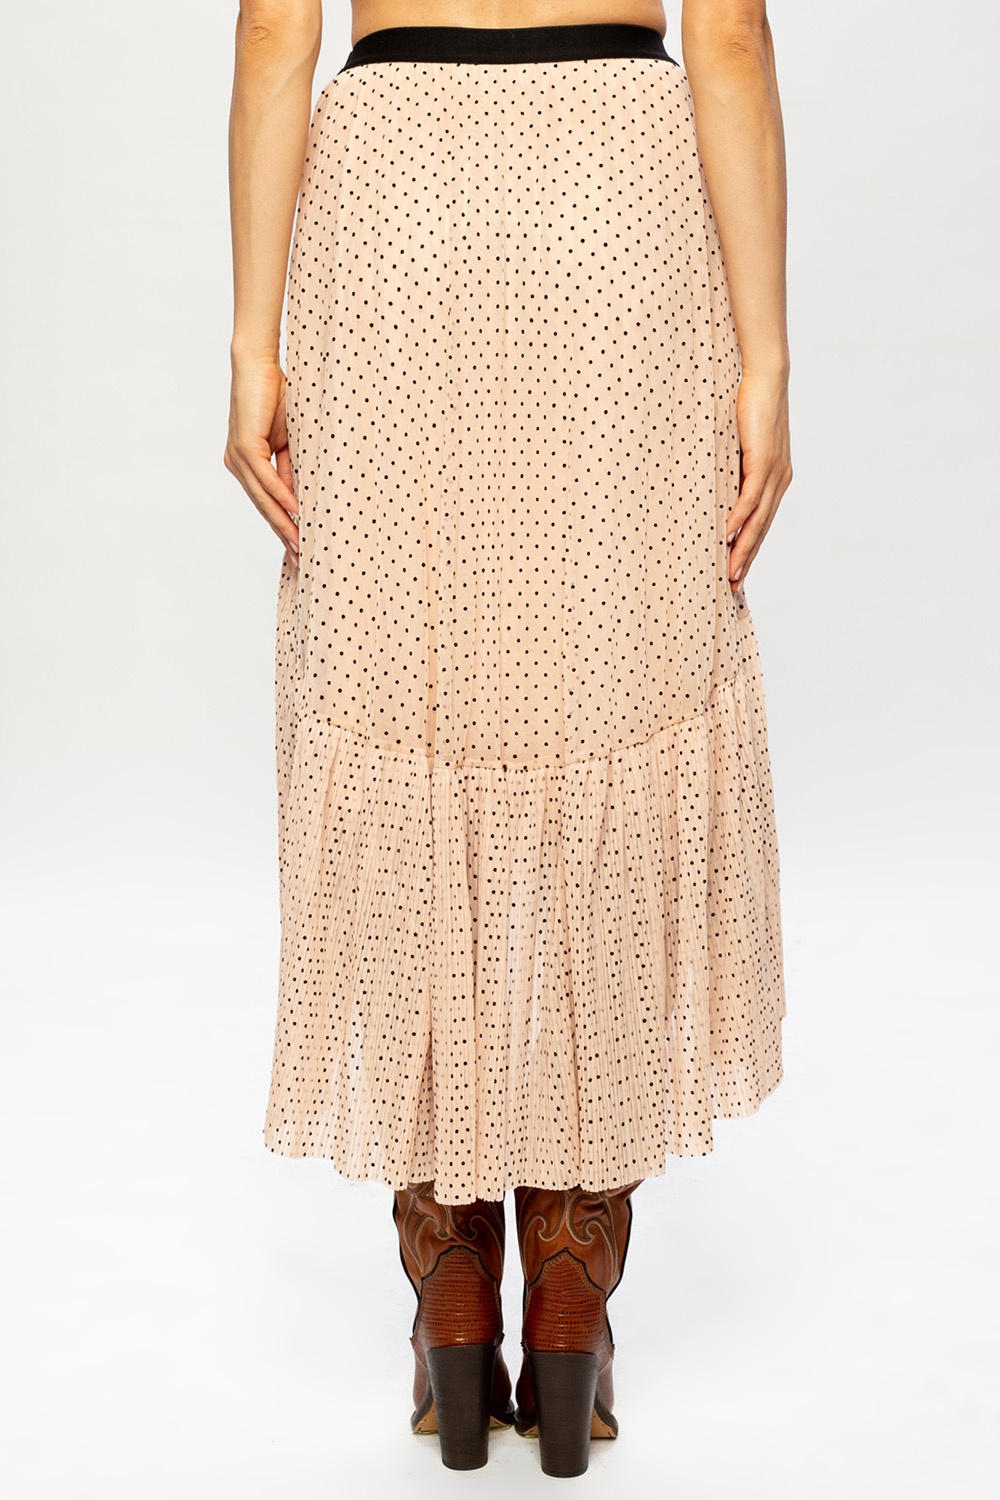 AllSaints 'Aubrey' patterned skirt | Women's Clothing | Vitkac